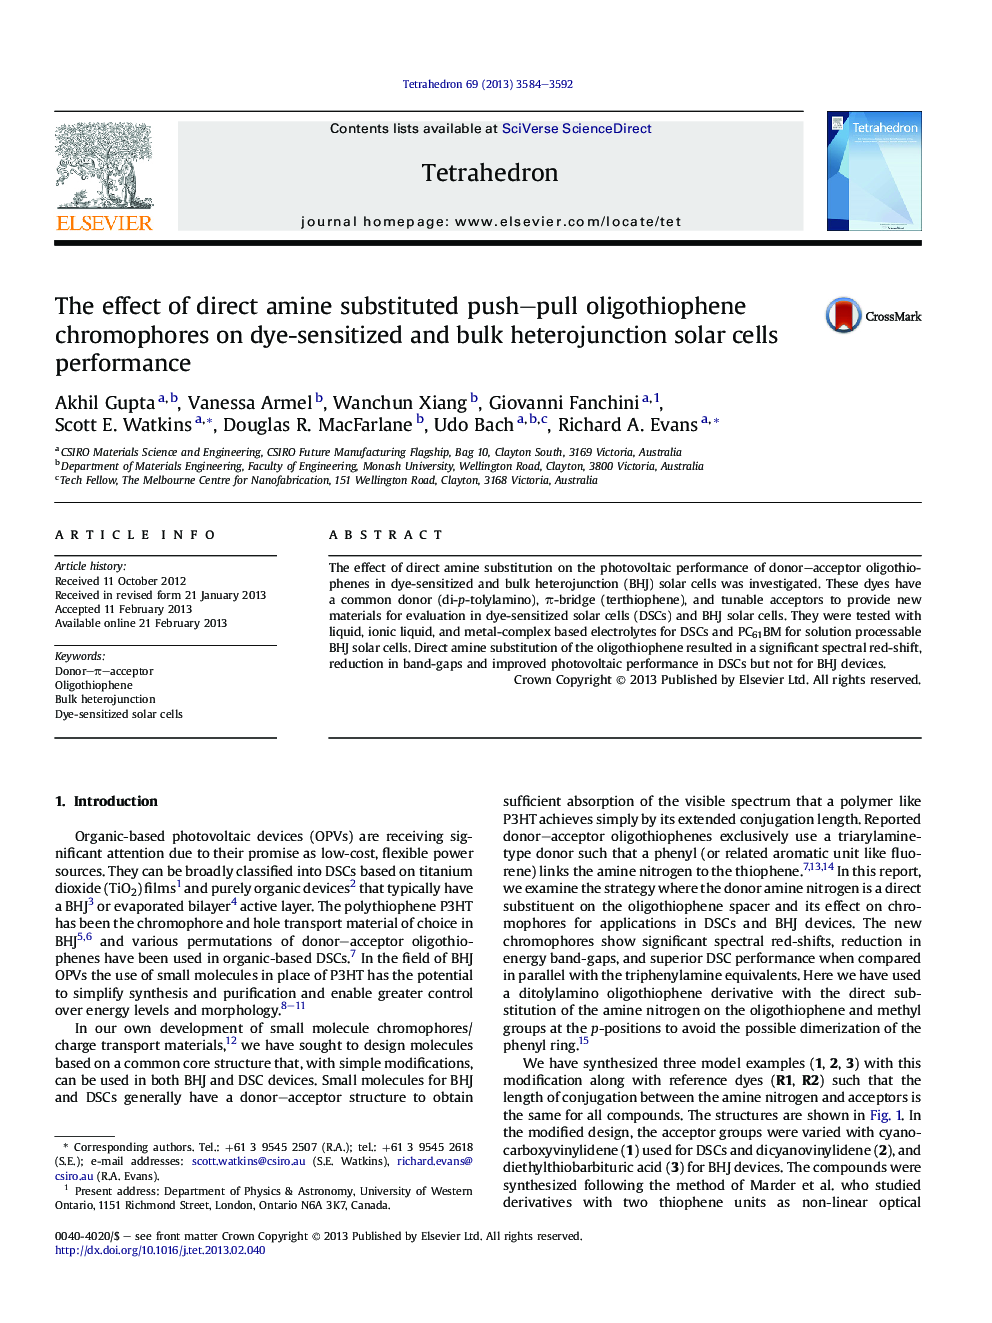 The effect of direct amine substituted push-pull oligothiophene chromophores on dye-sensitized and bulk heterojunction solar cells performance